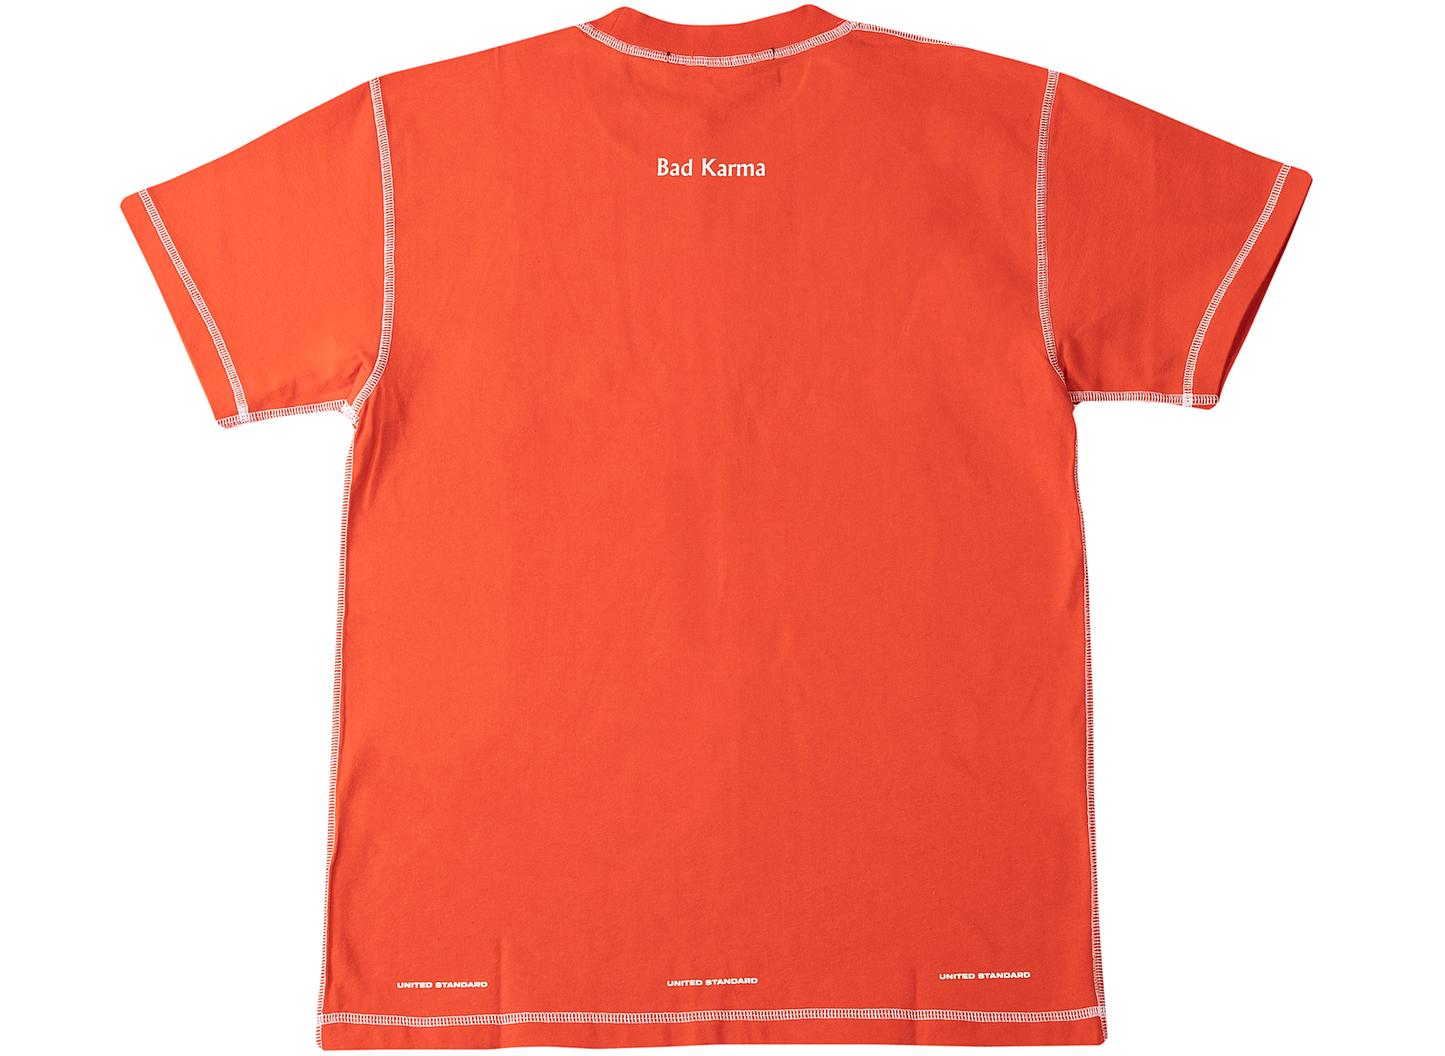 United Standard Karma T-Shirt